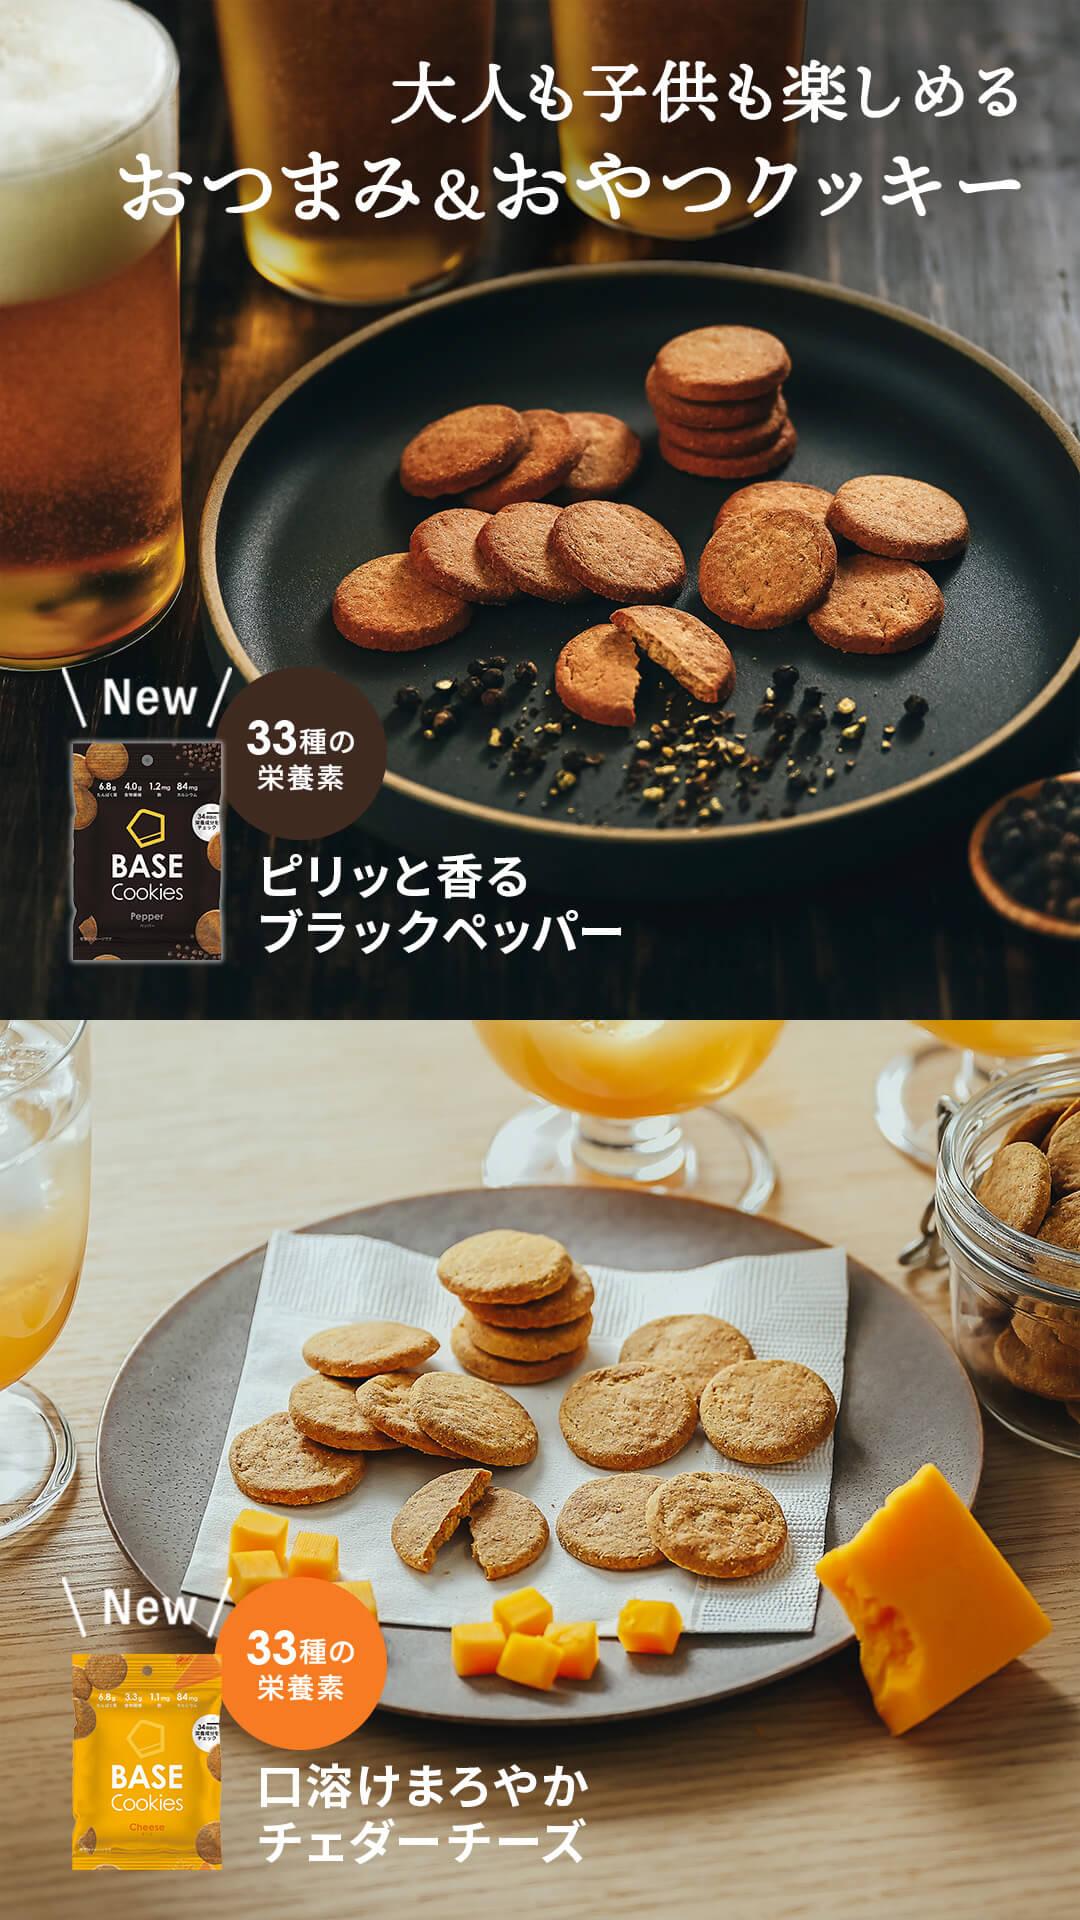 BASE Cookies ペッパー, BASE Cookies チーズ 新発売